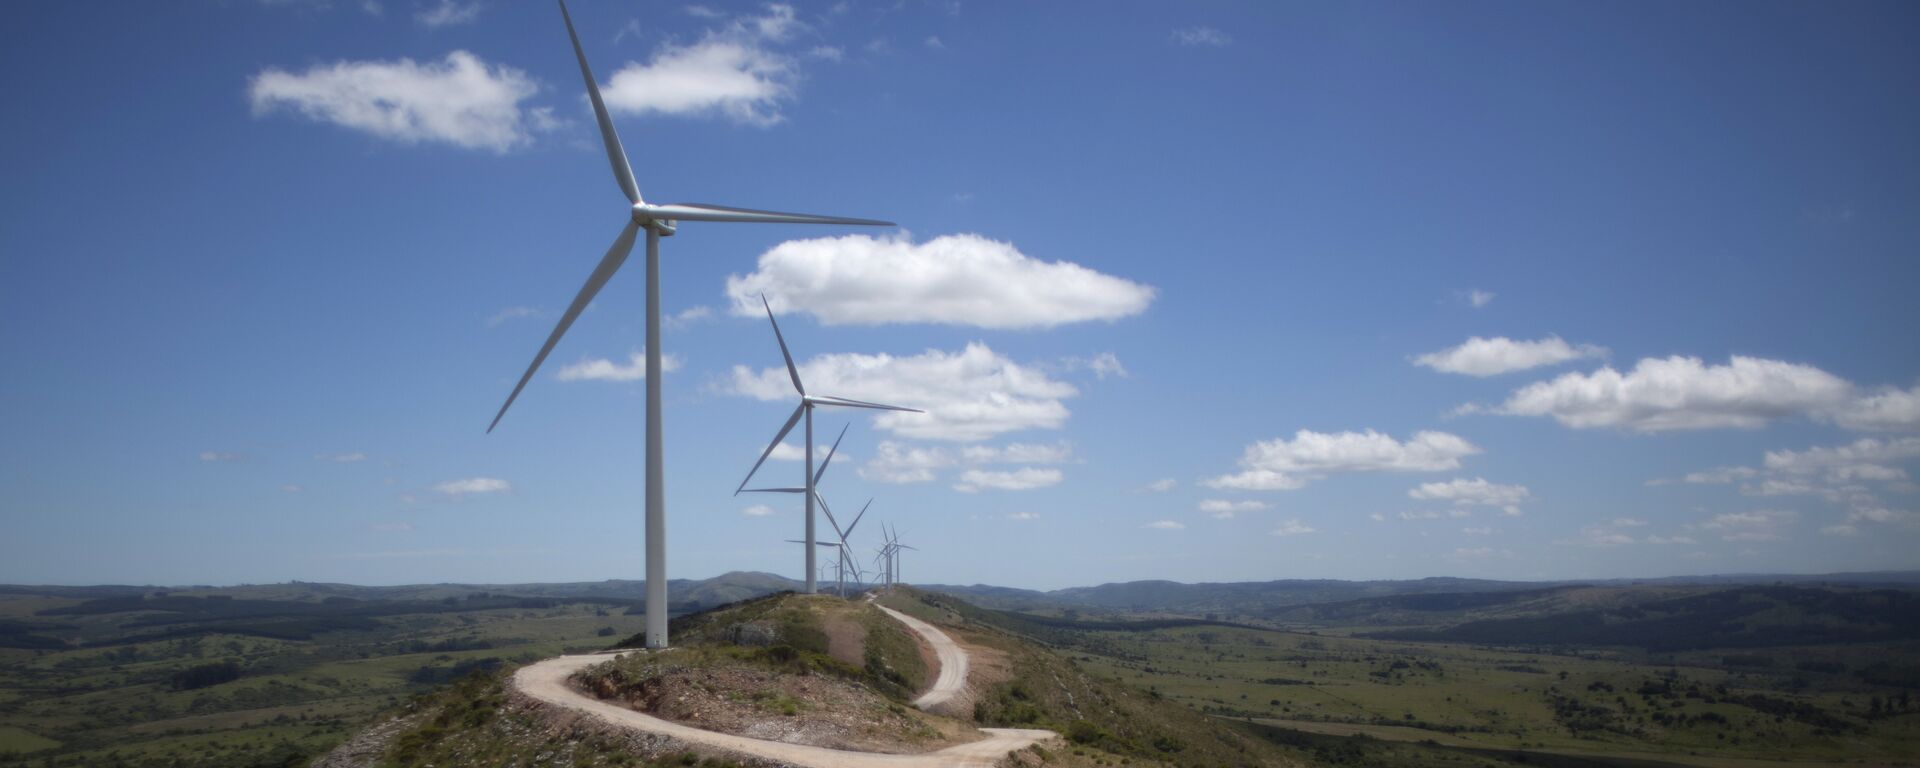 Wind turbines are seen at the Sierra de los Caracoles wind farm, in the department of Maldonado, east of Montevideo, on December 18, 2014.  - Sputnik Mundo, 1920, 17.08.2021